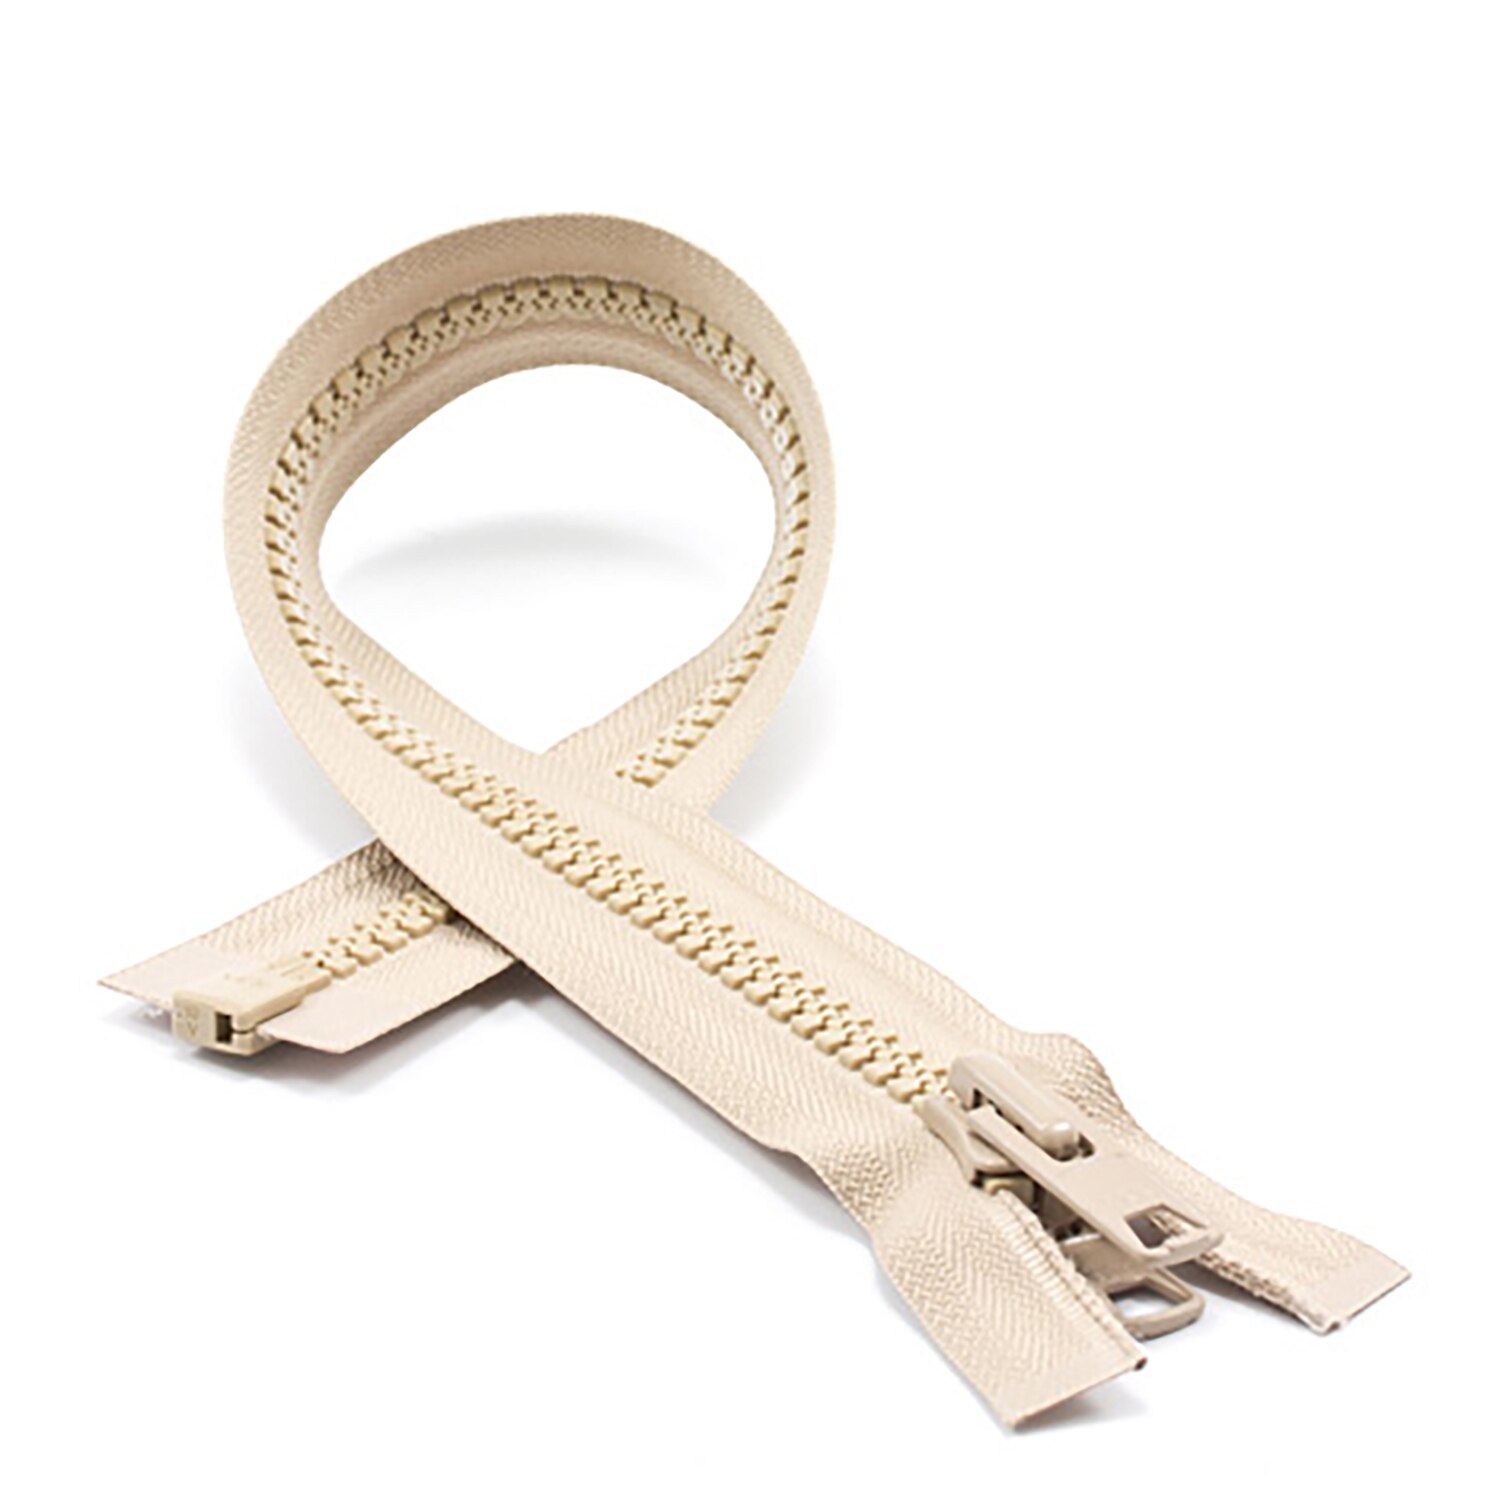 PLM – Perfect Zipper – PLM – Perfect Zipper